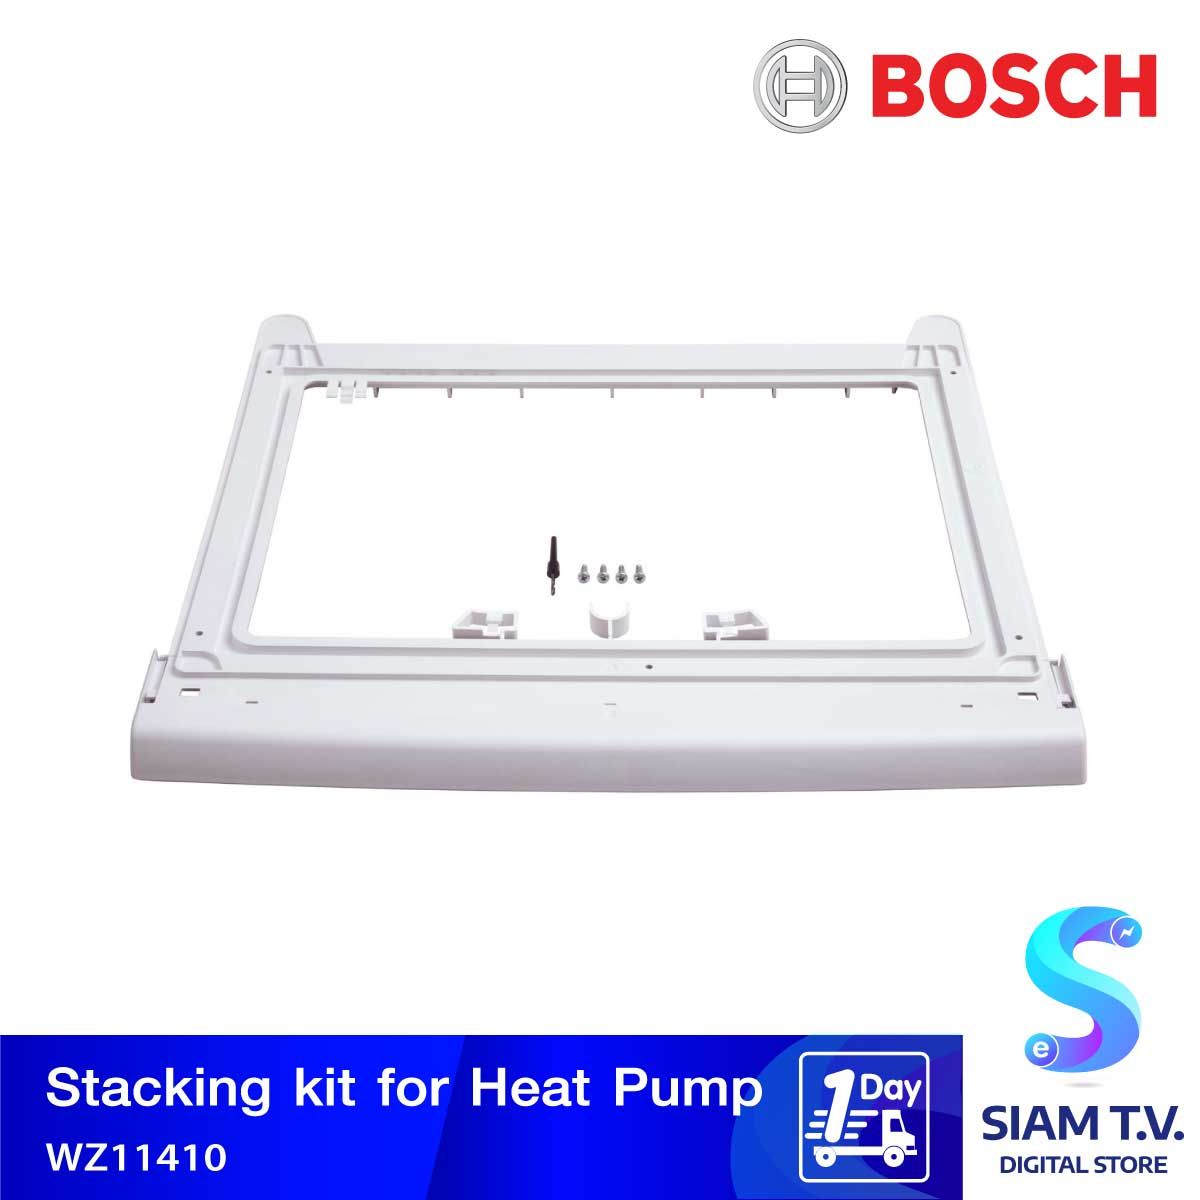 BOSCH Stacking kit for Heat Pump รุ่น WZ11410